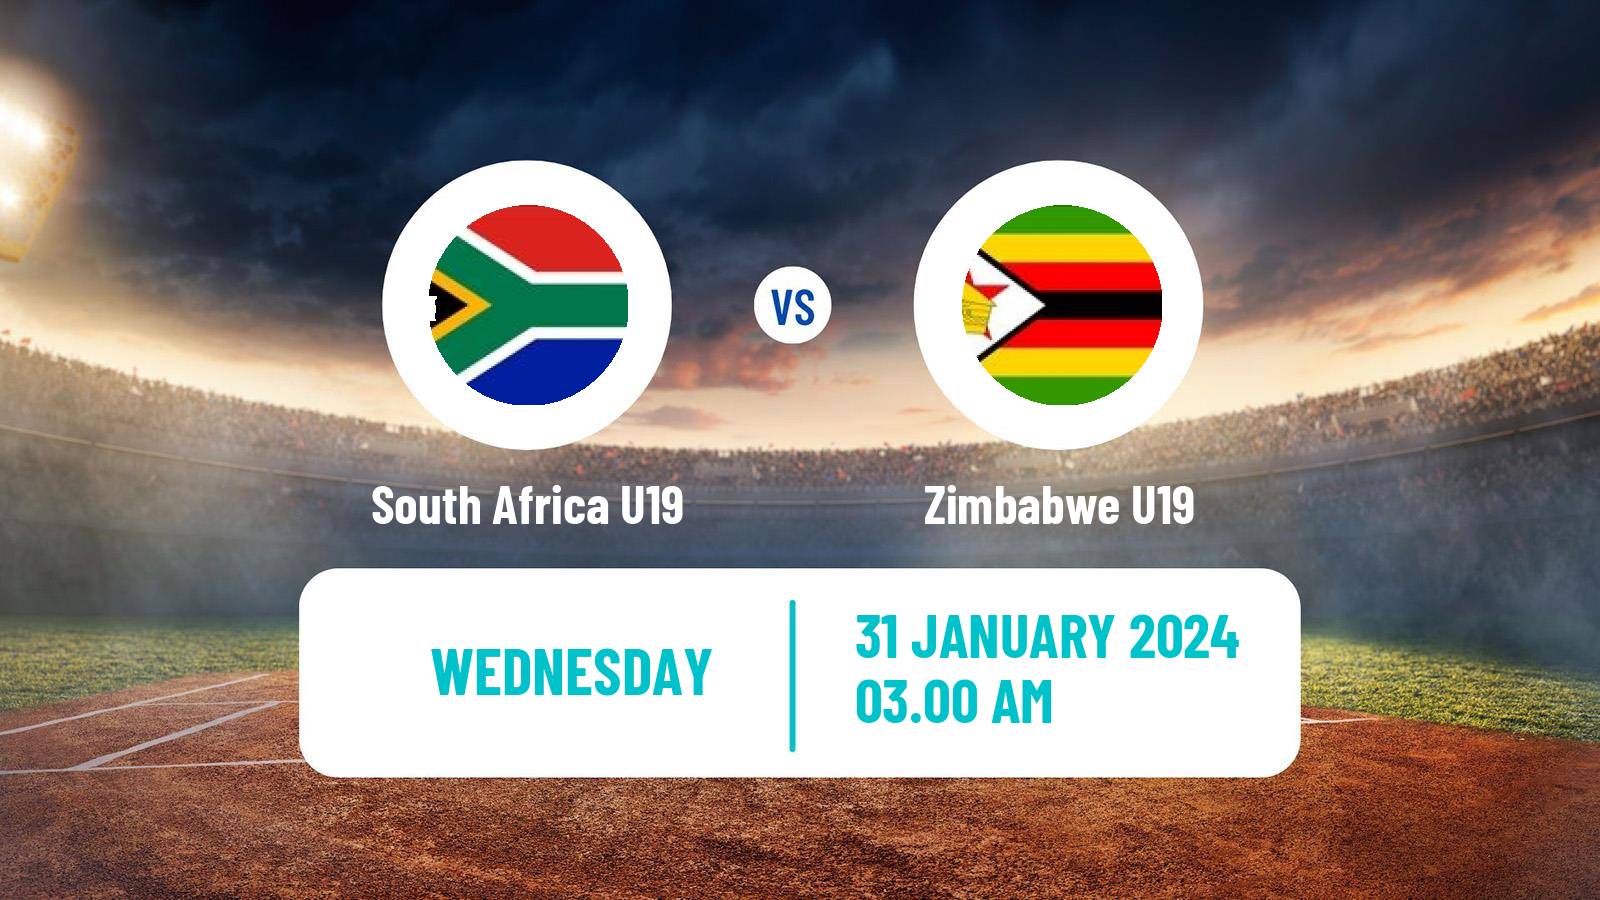 Cricket ICC U19 World Cup South Africa U19 - Zimbabwe U19